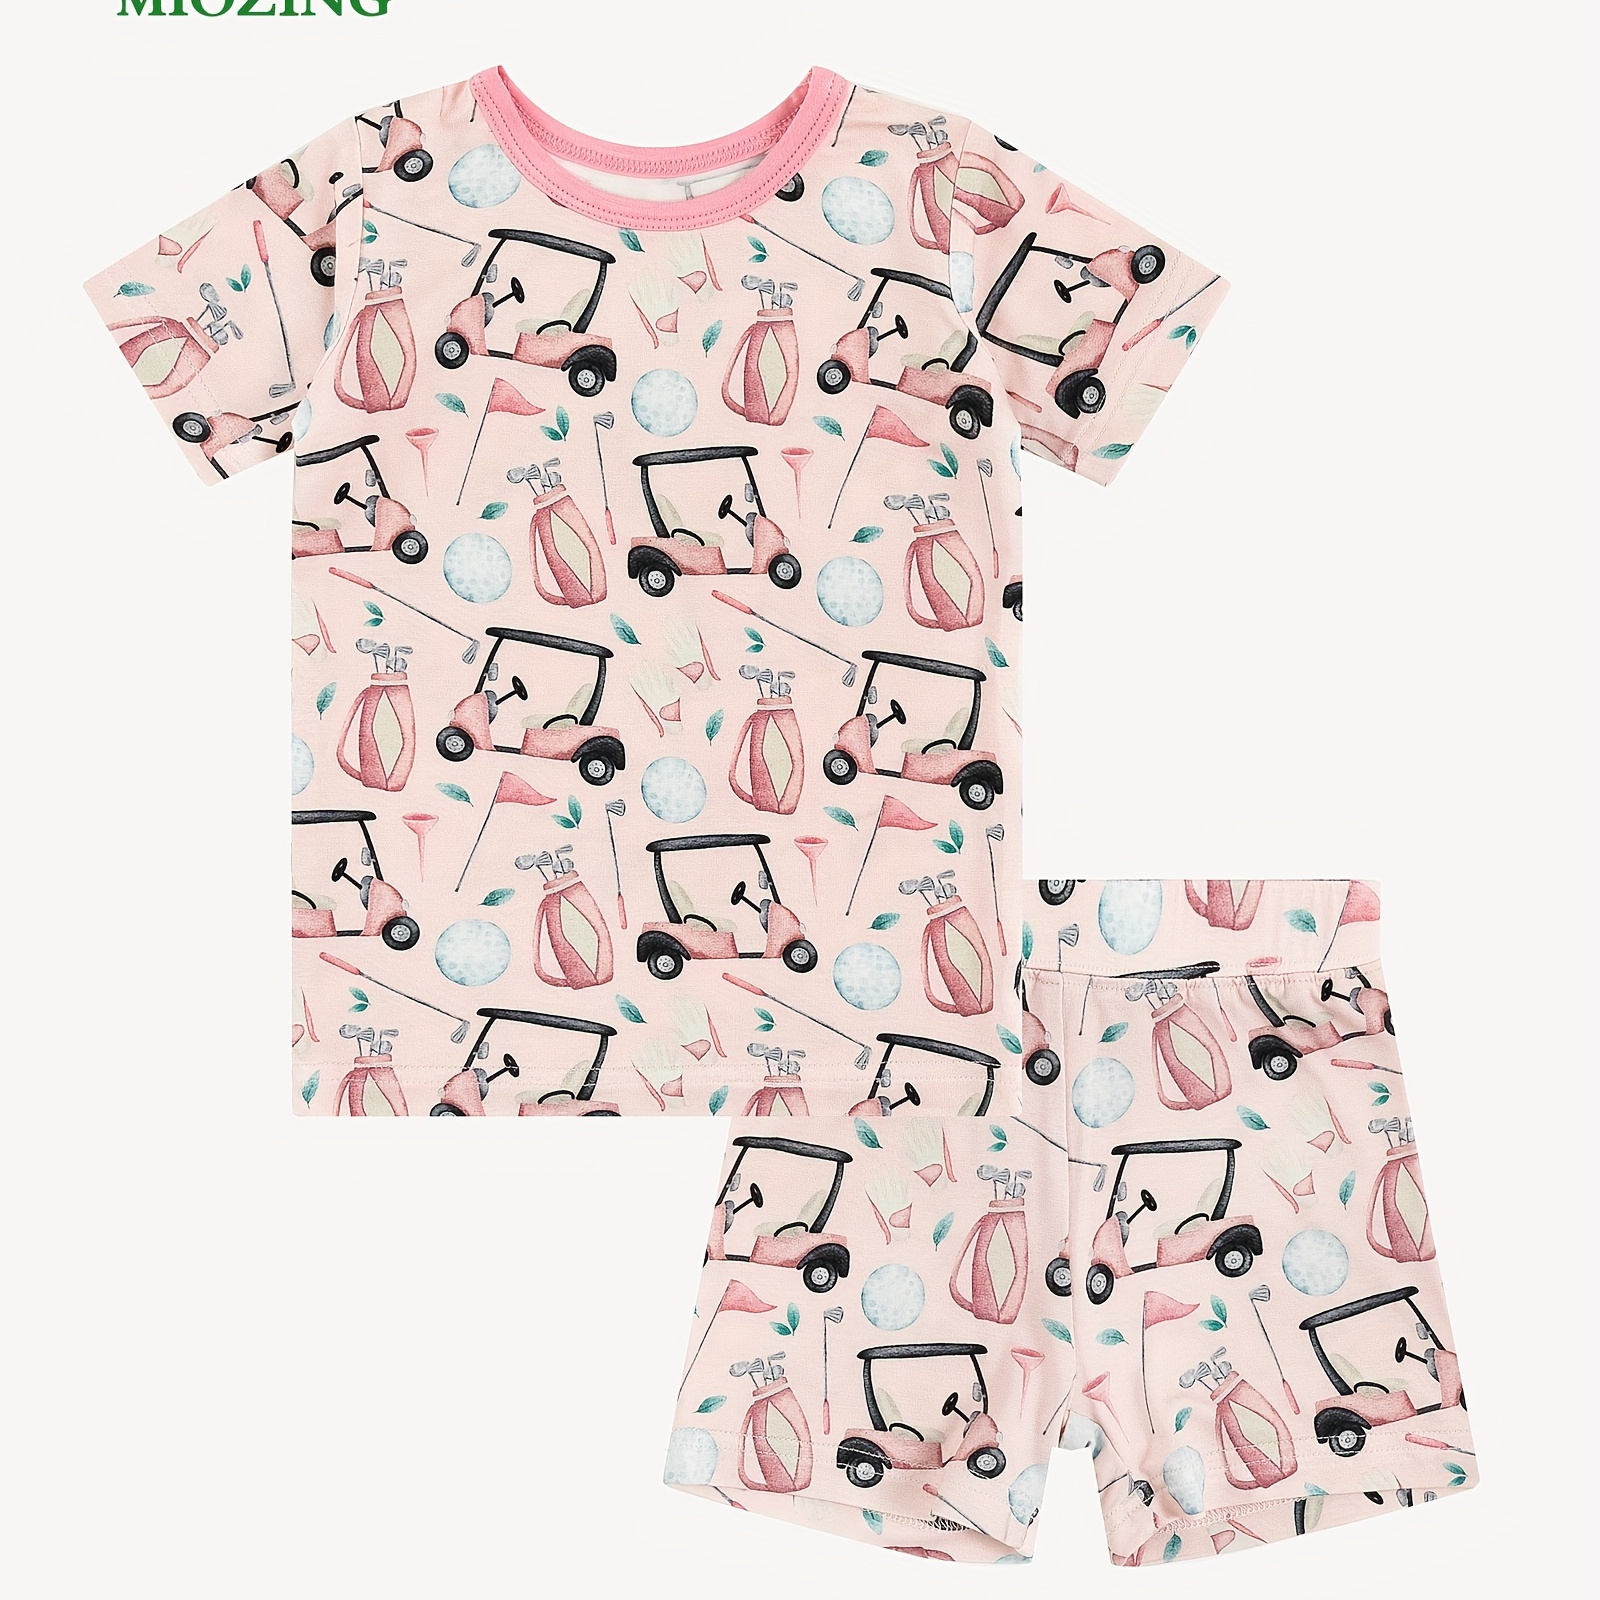 

Miozing Bamboo Fiber 2pcs, Toddler Kid's T-shirt & Comfy Shorts, Cartoon Car Pattern Set, Baby Girl's Clothes